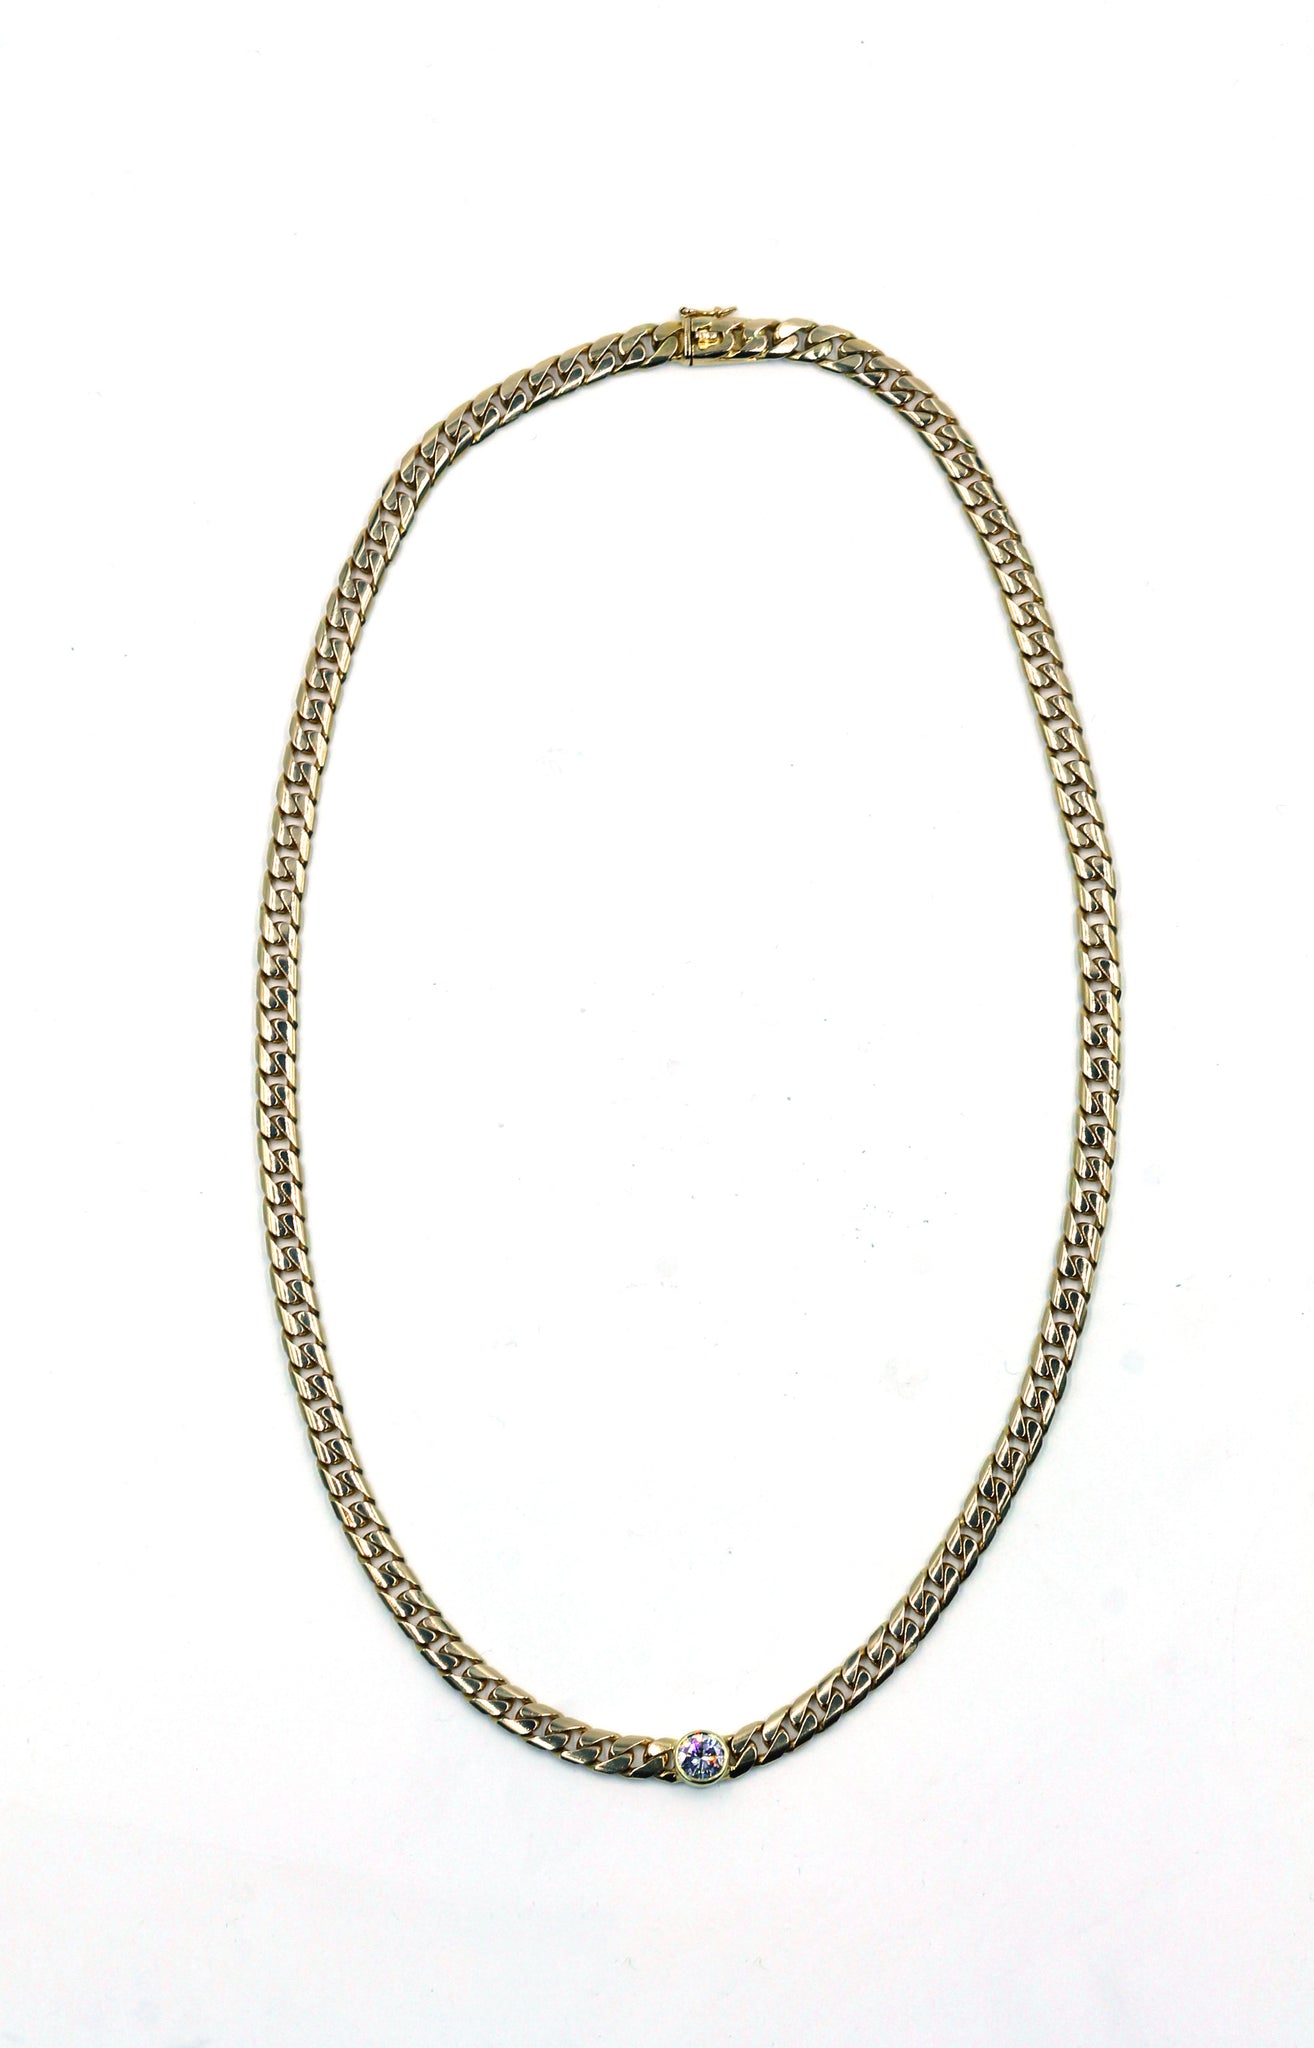 Vintage Diamond Necklace, SOLD